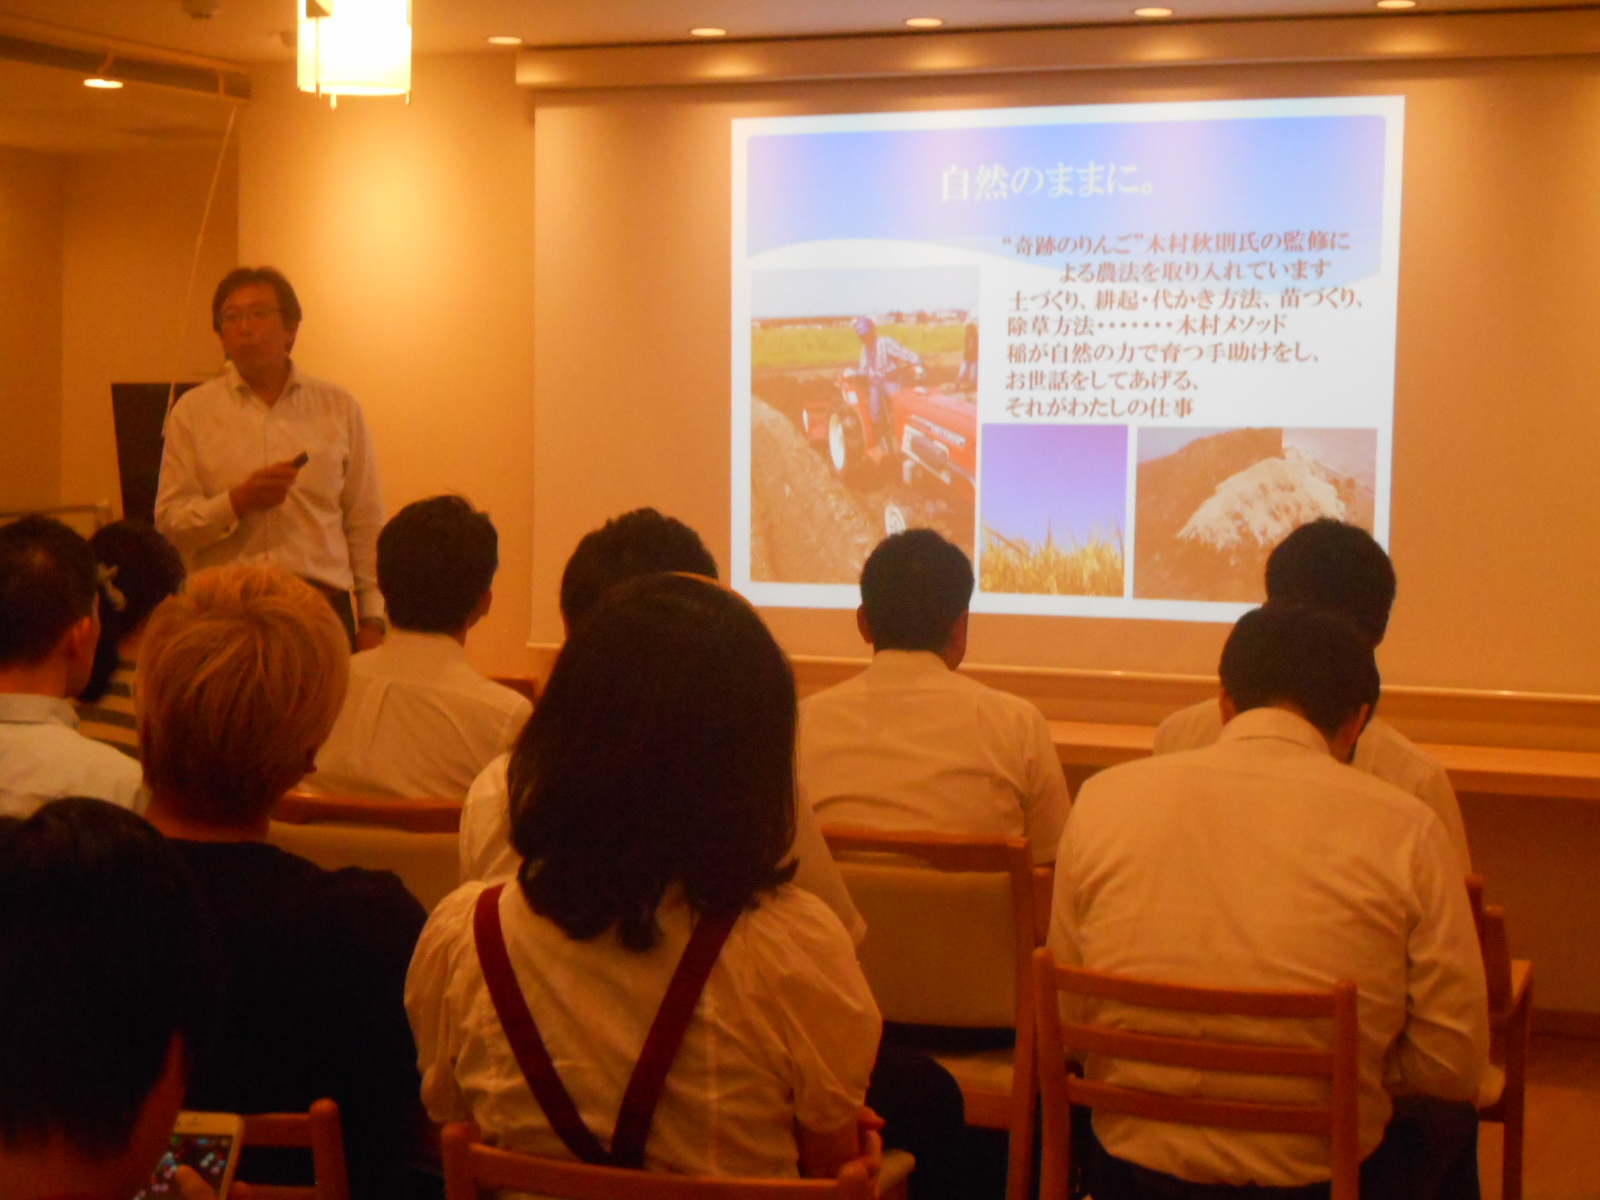 DSCN1837 - AoMoLink〜赤坂〜の第2回勉強会&交流会開催します。